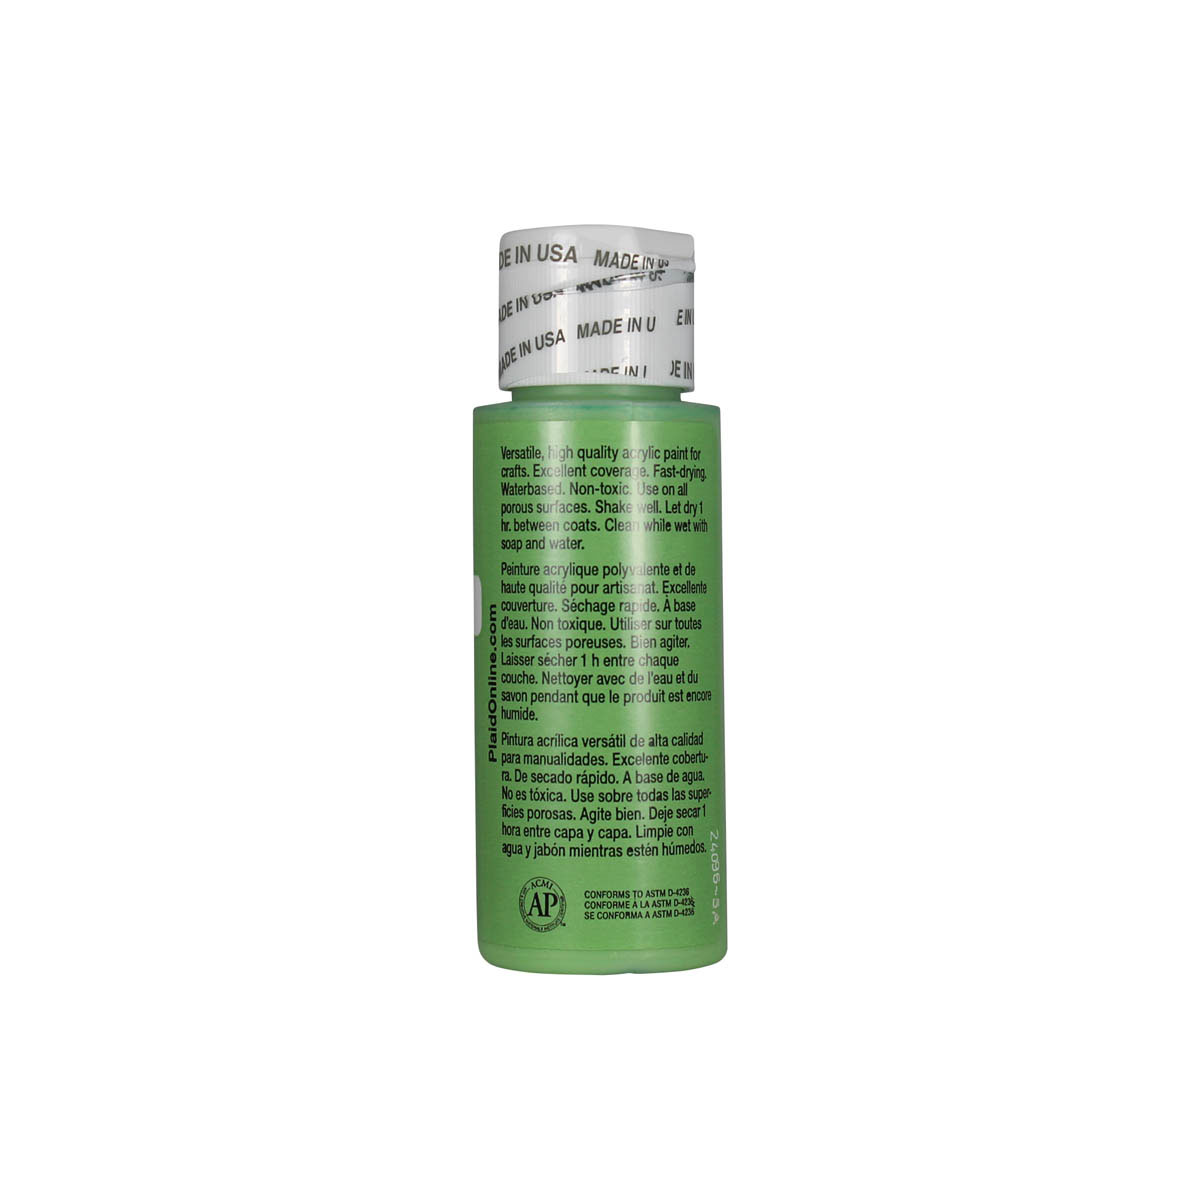 Shop Plaid Apple Barrel ® Colors - Wedgewood Green, 2 oz. - 20530 - 20530